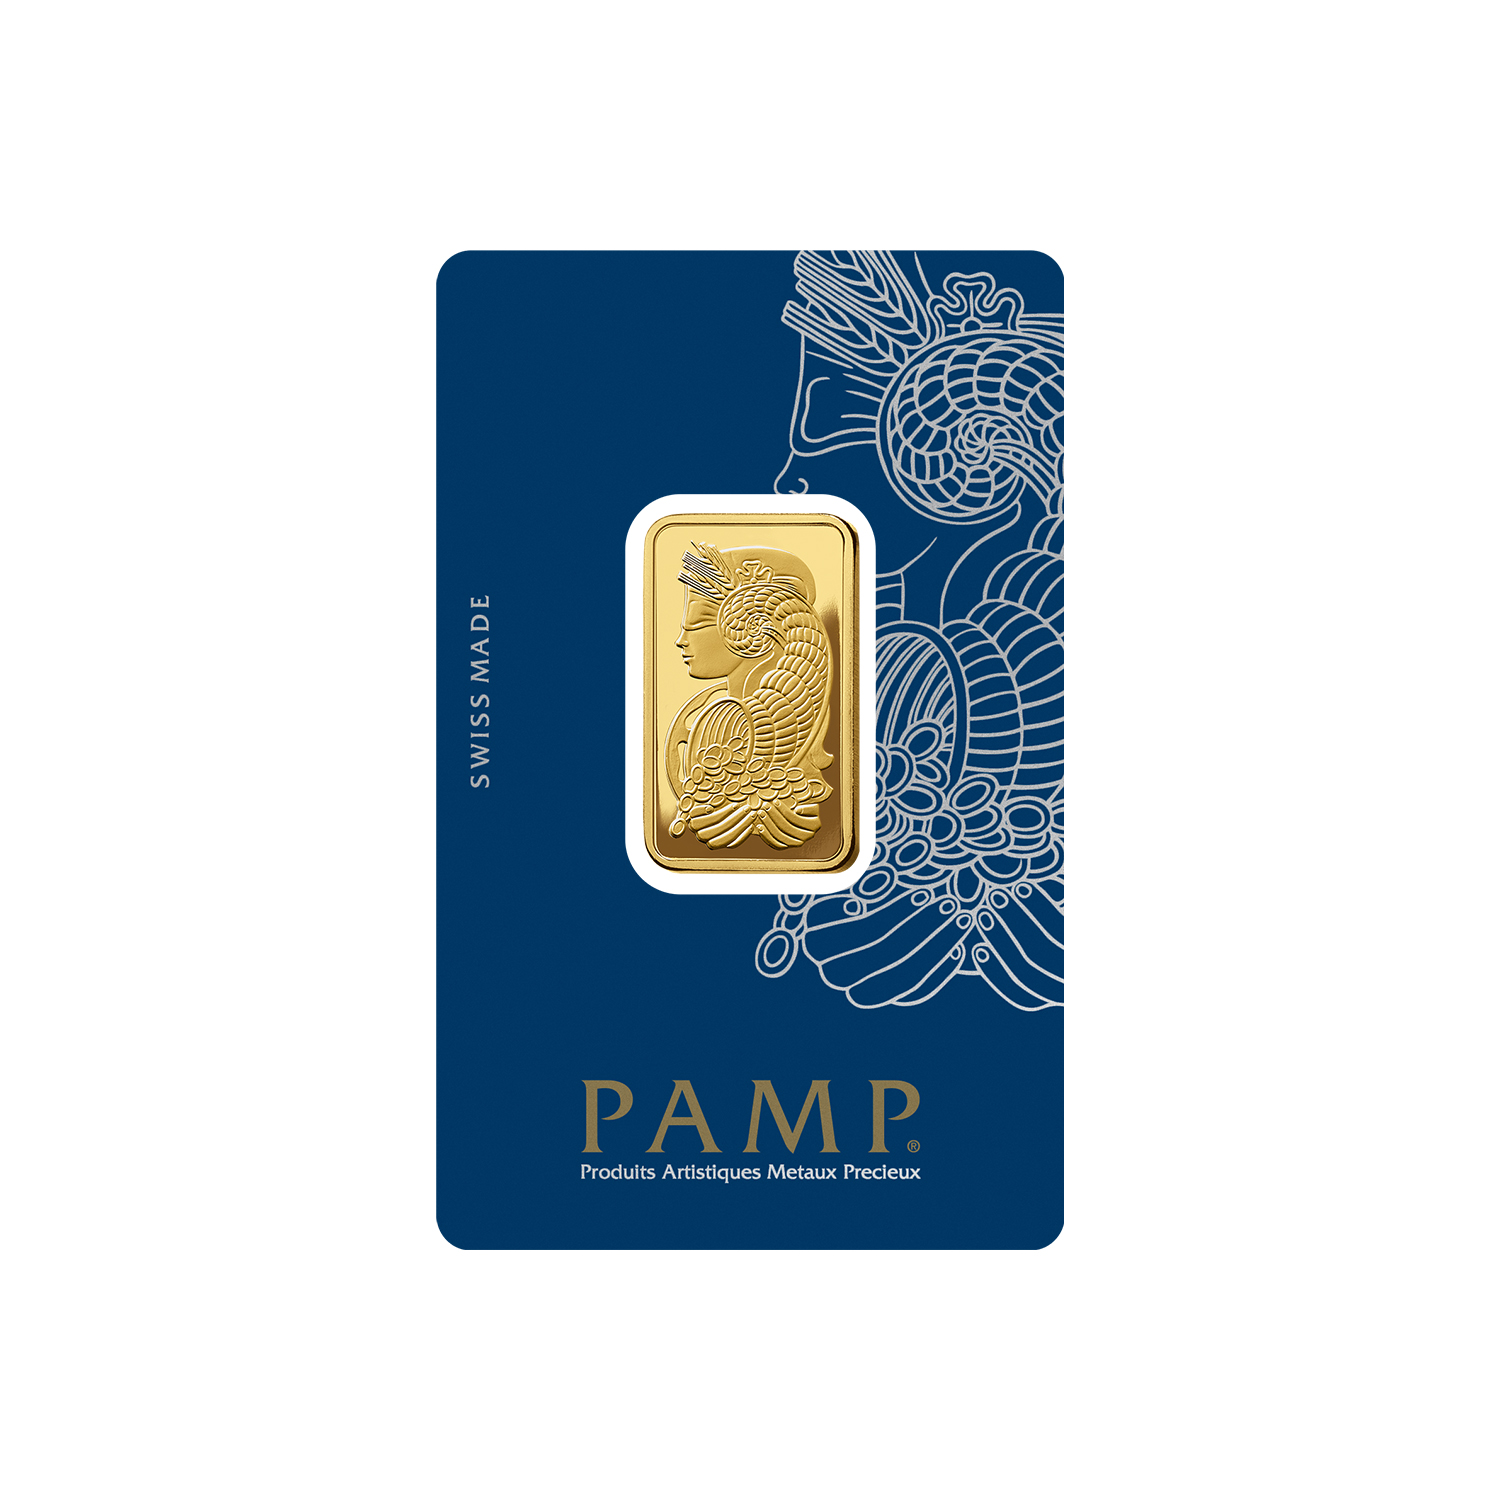 [20Gram] PAMP Fortuna Gold Minted Bar